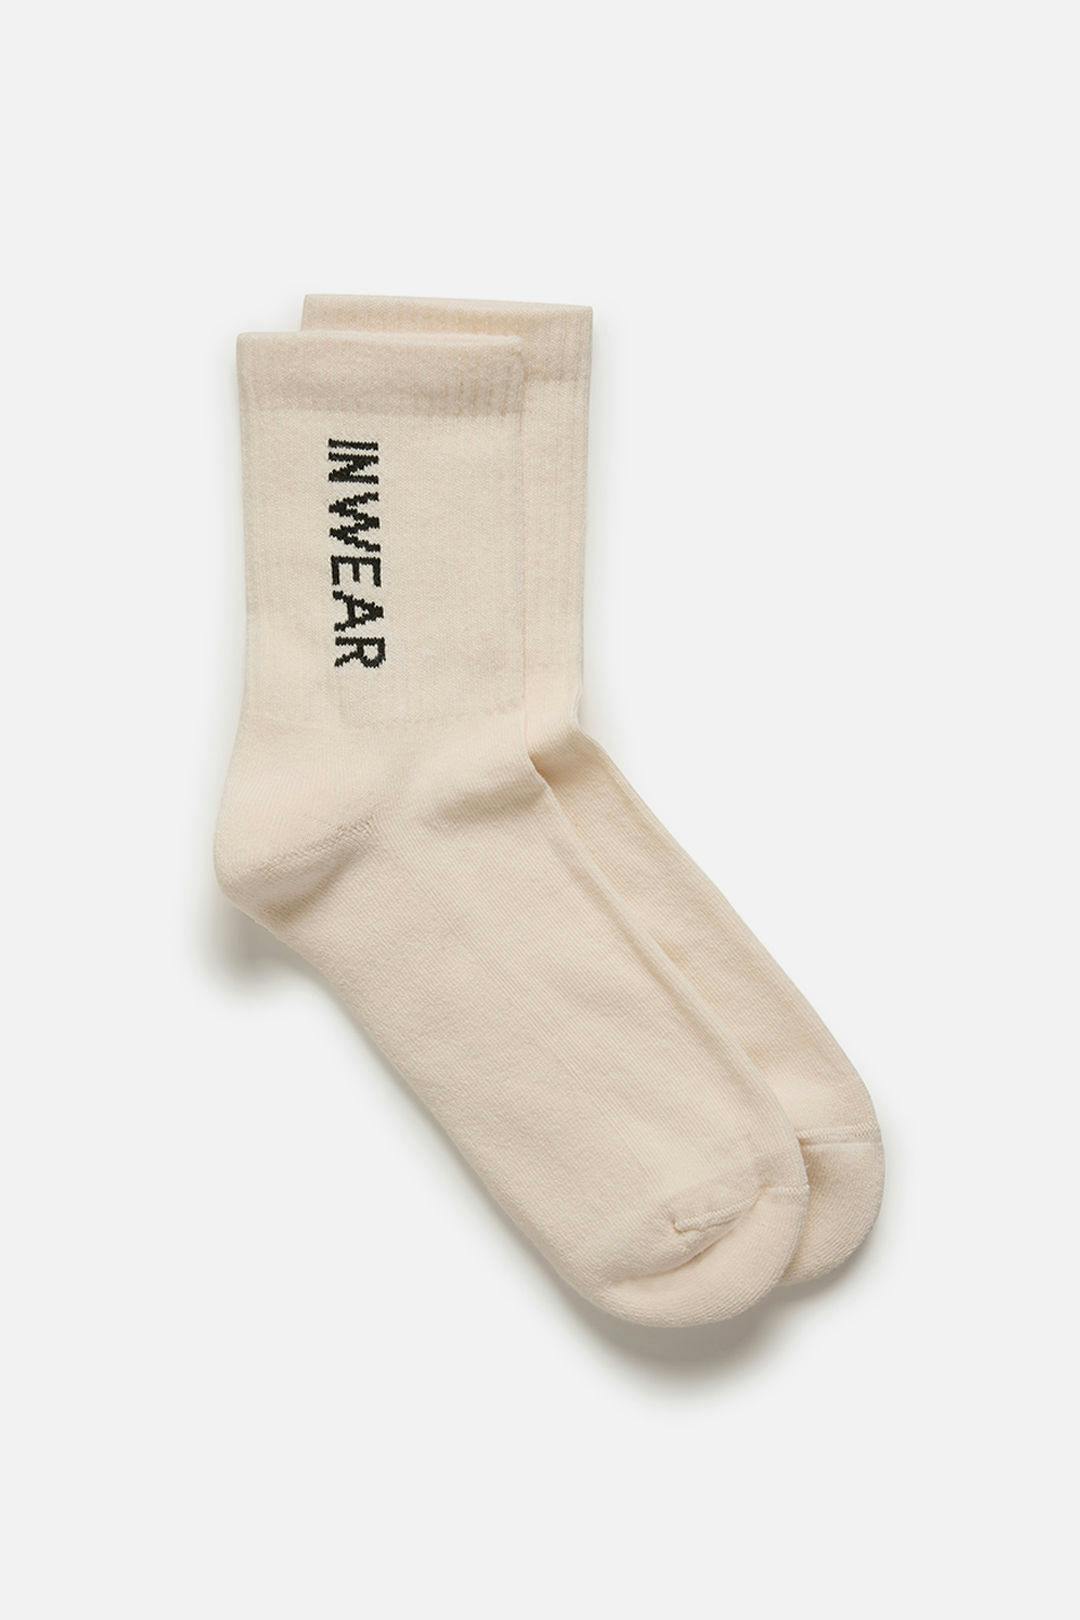 Unip socks